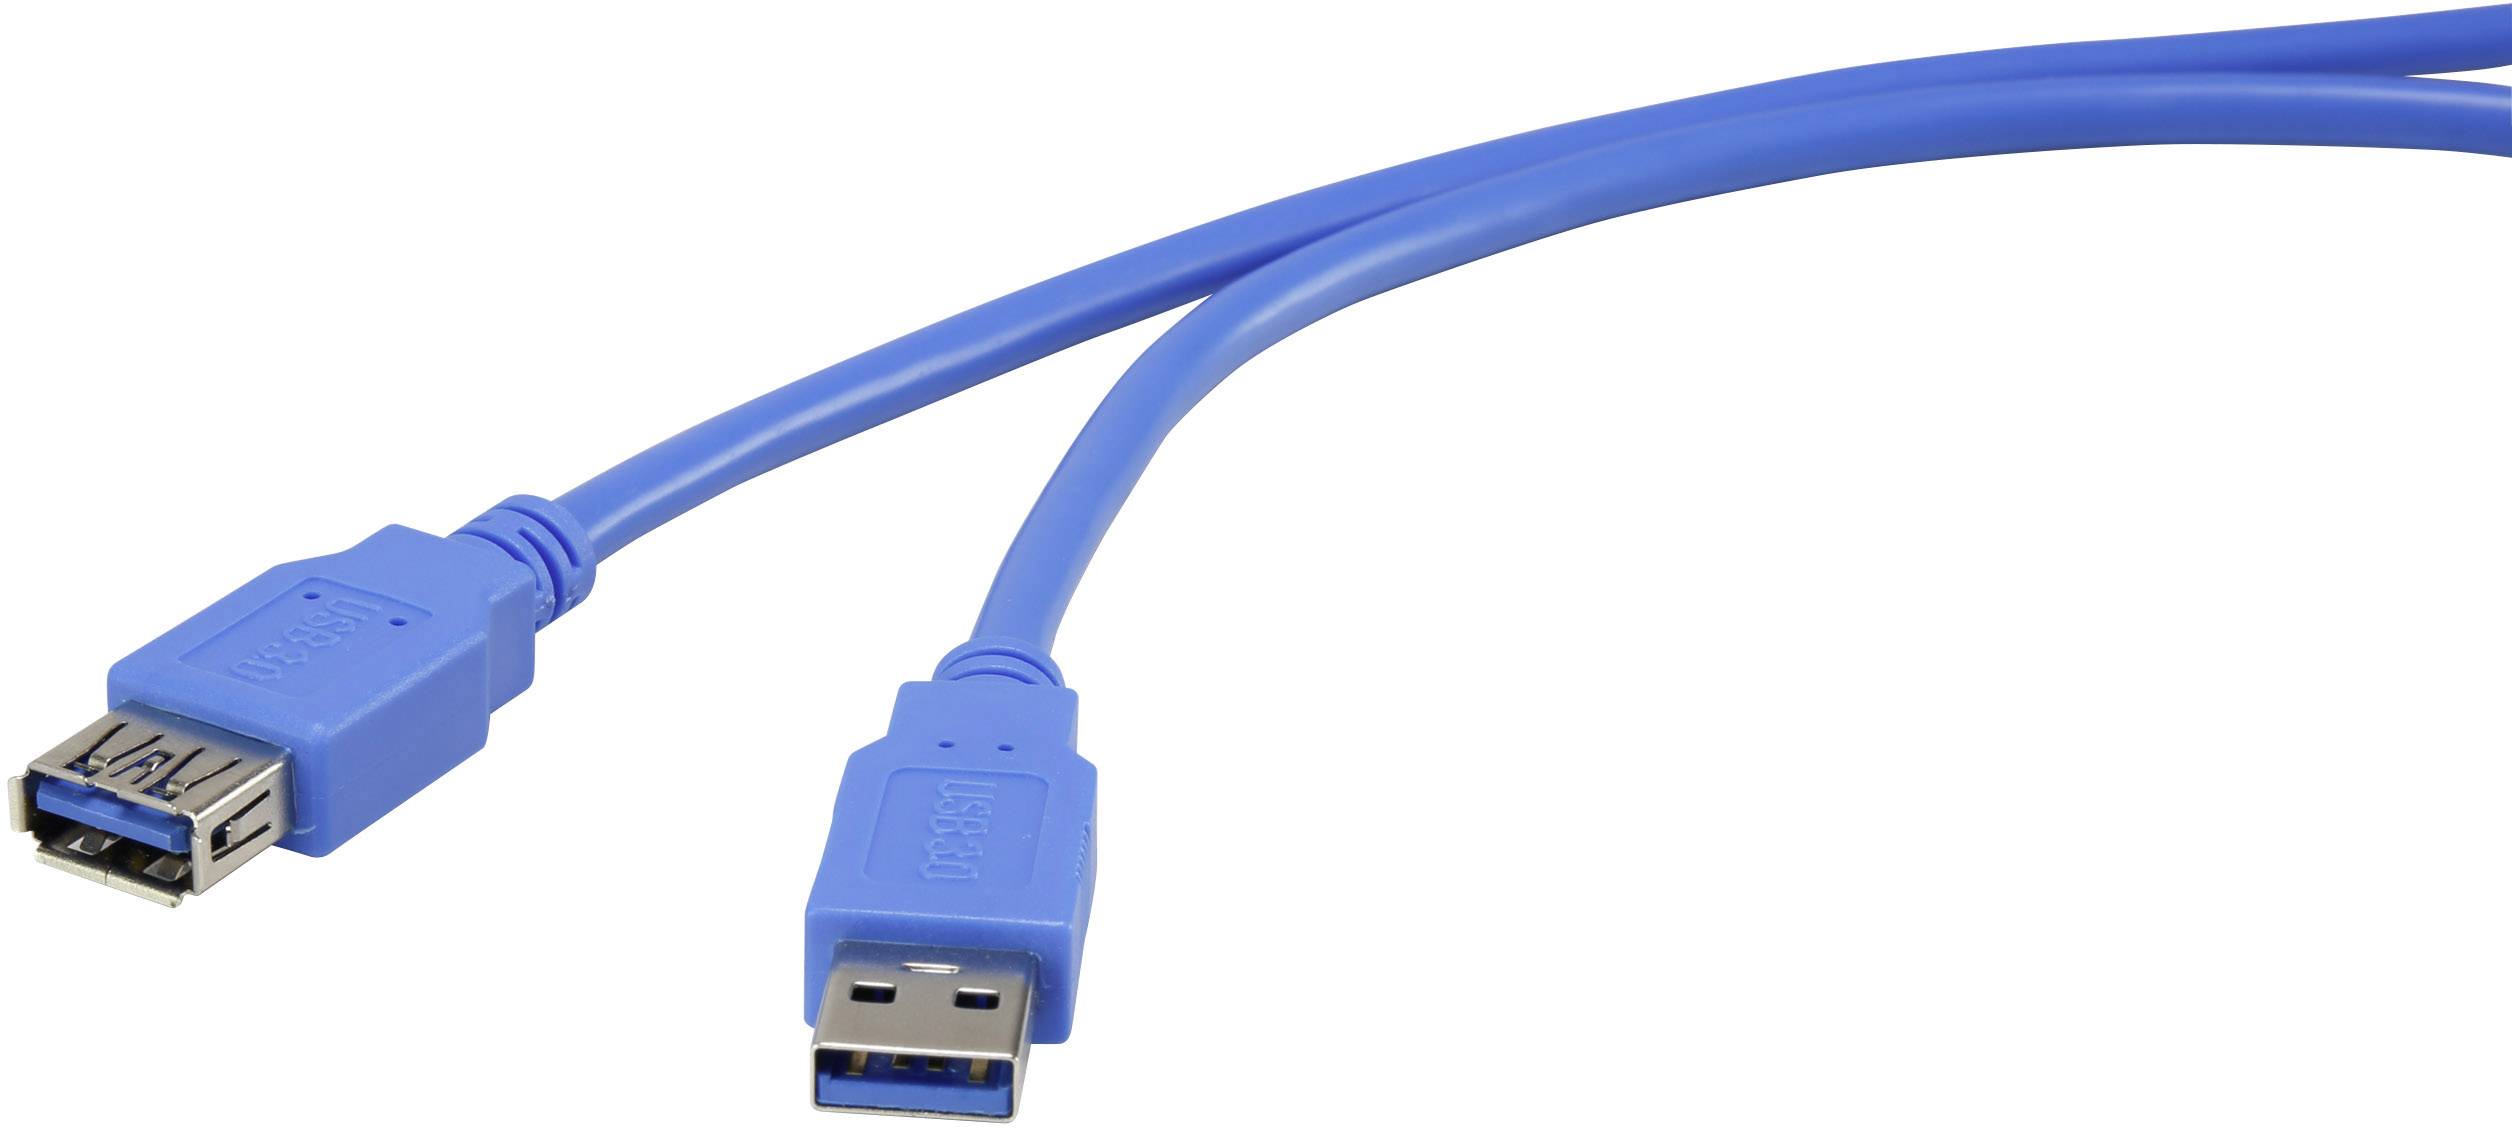 CONRAD Renkforce USB 3.0 Verlängerungskabel [1x USB 3.0 Stecker A - 1x USB 3.0 Buchse A] 1 m Blau ve